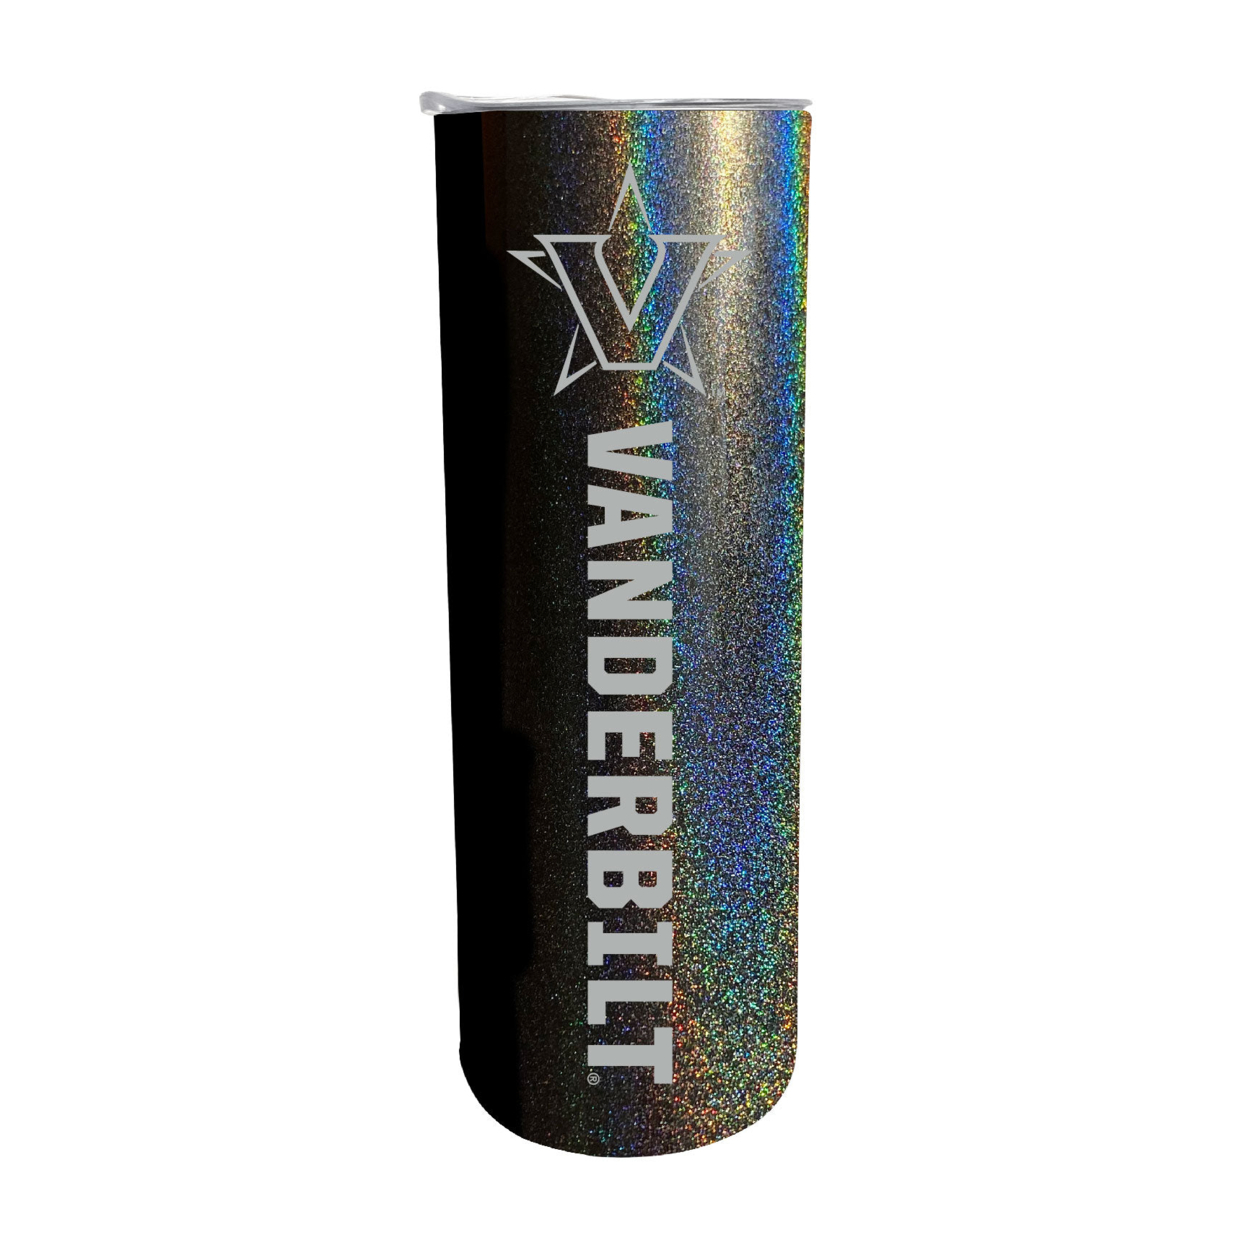 Vanderbilt University 20oz Insulated Stainless Steel Skinny Tumbler - Rainbow Glitter Black